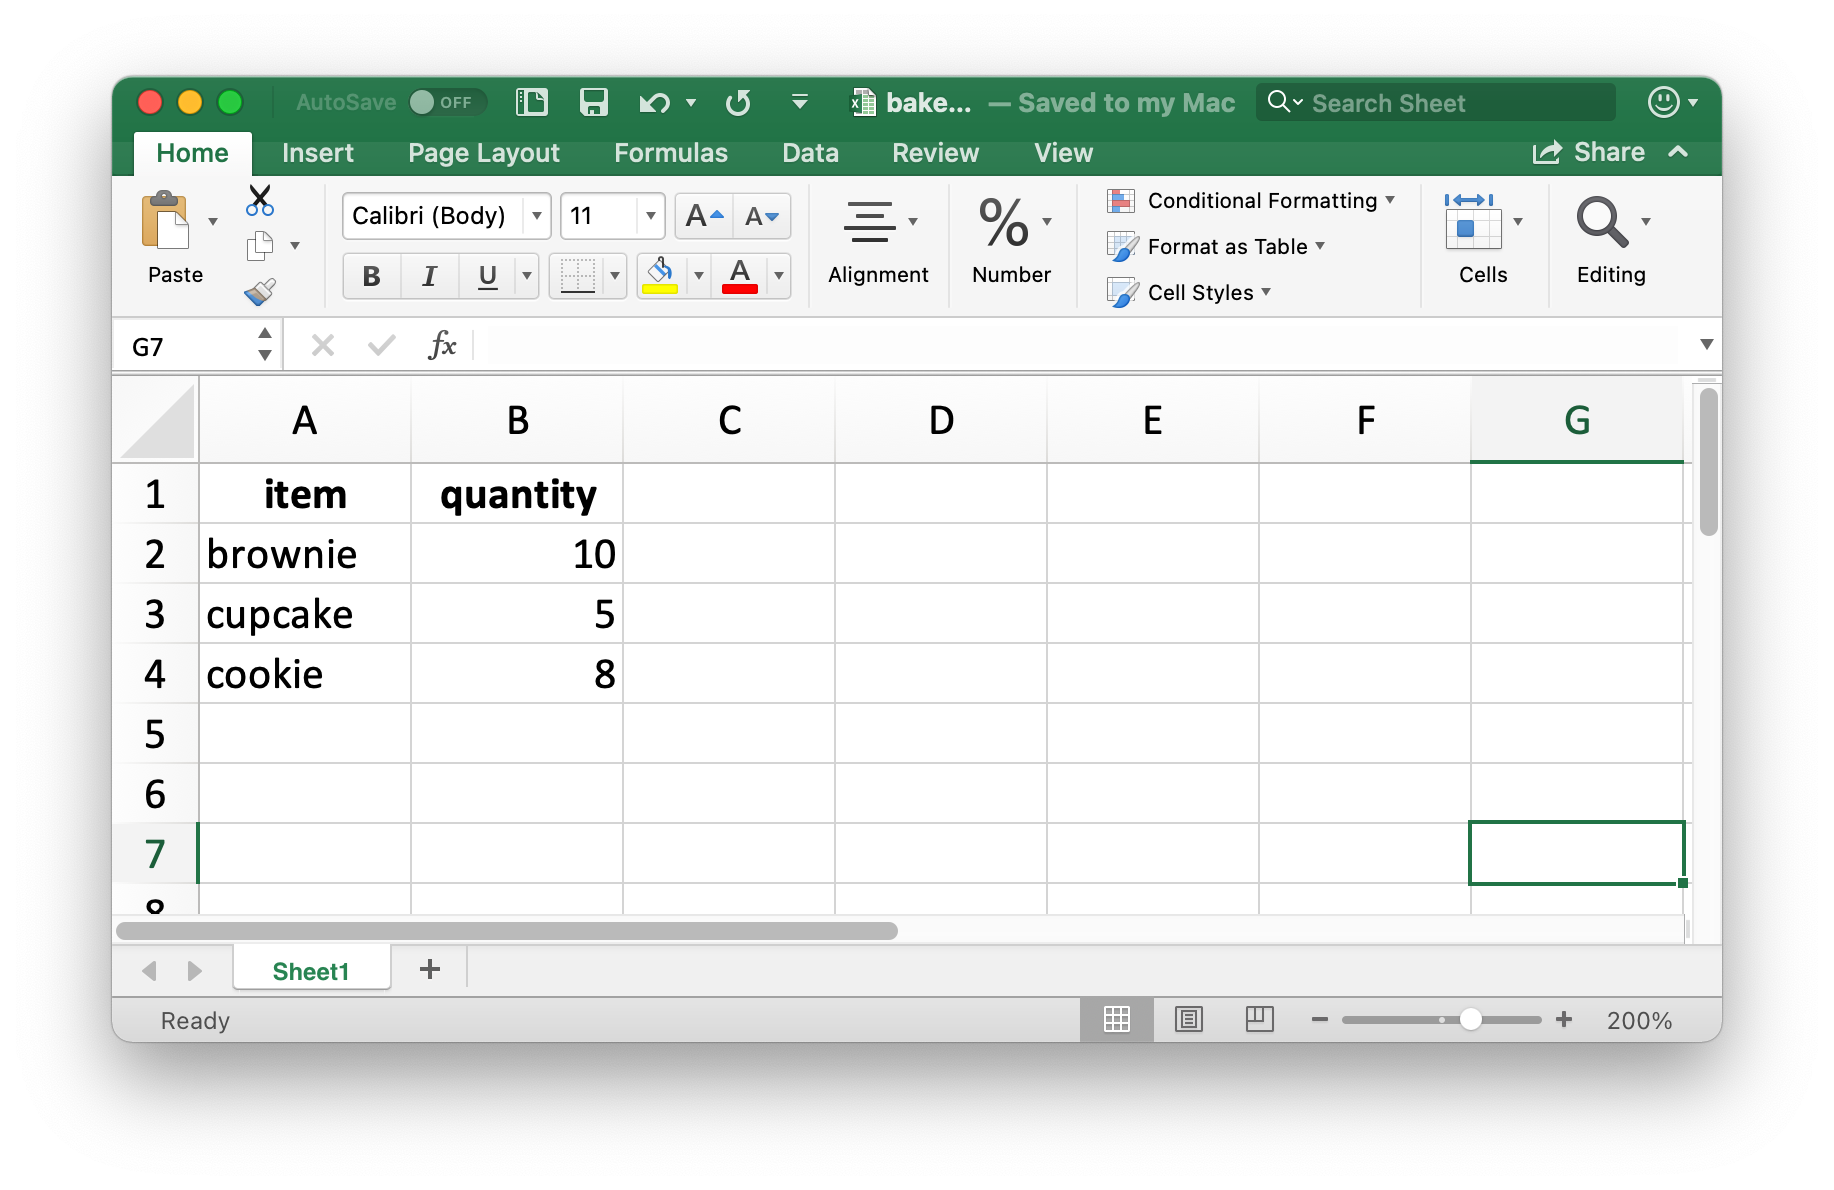 Bake sale data frame created earlier in Excel.